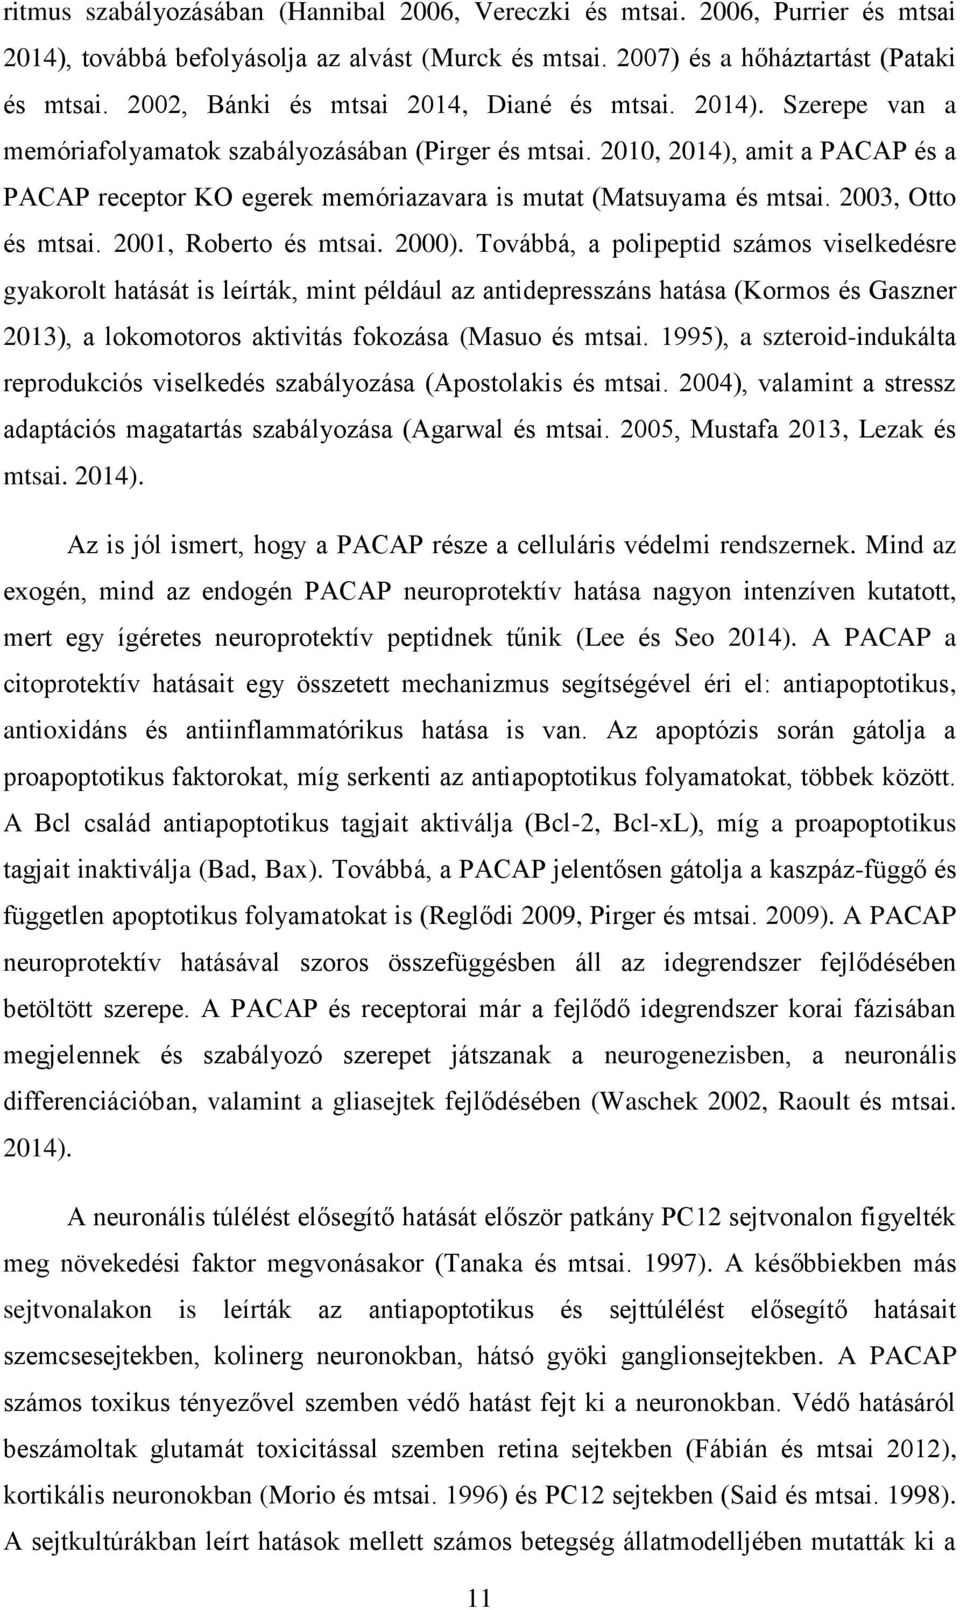 2010, 2014), amit a PACAP és a PACAP receptor KO egerek memóriazavara is mutat (Matsuyama és mtsai. 2003, Otto és mtsai. 2001, Roberto és mtsai. 2000).